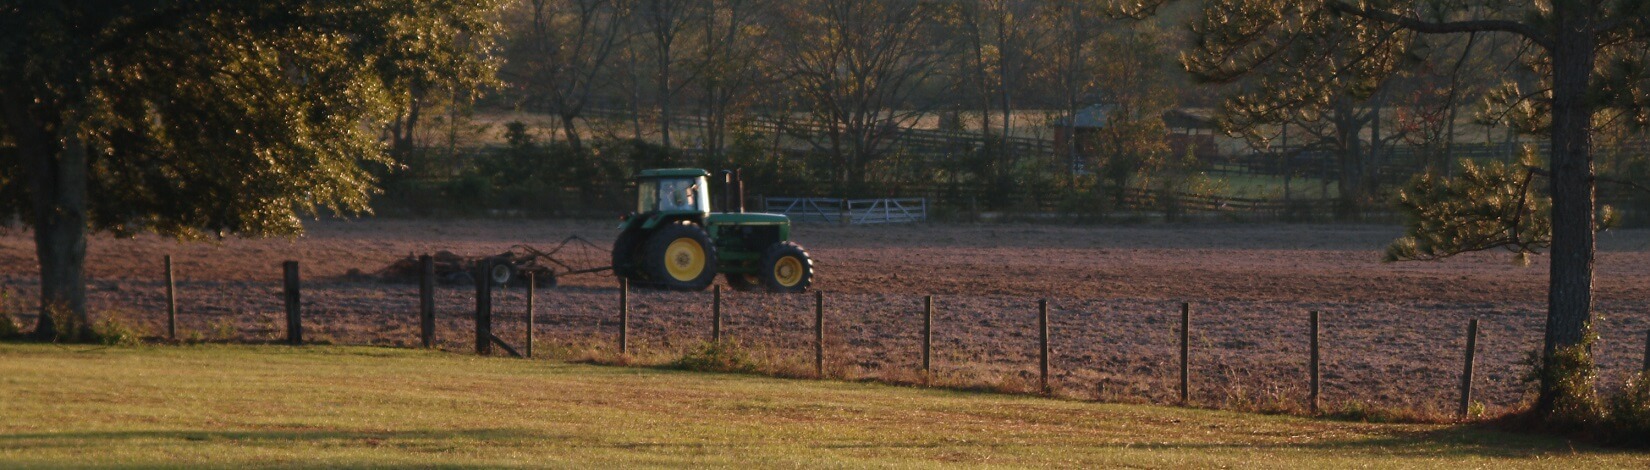 Tractor in Field